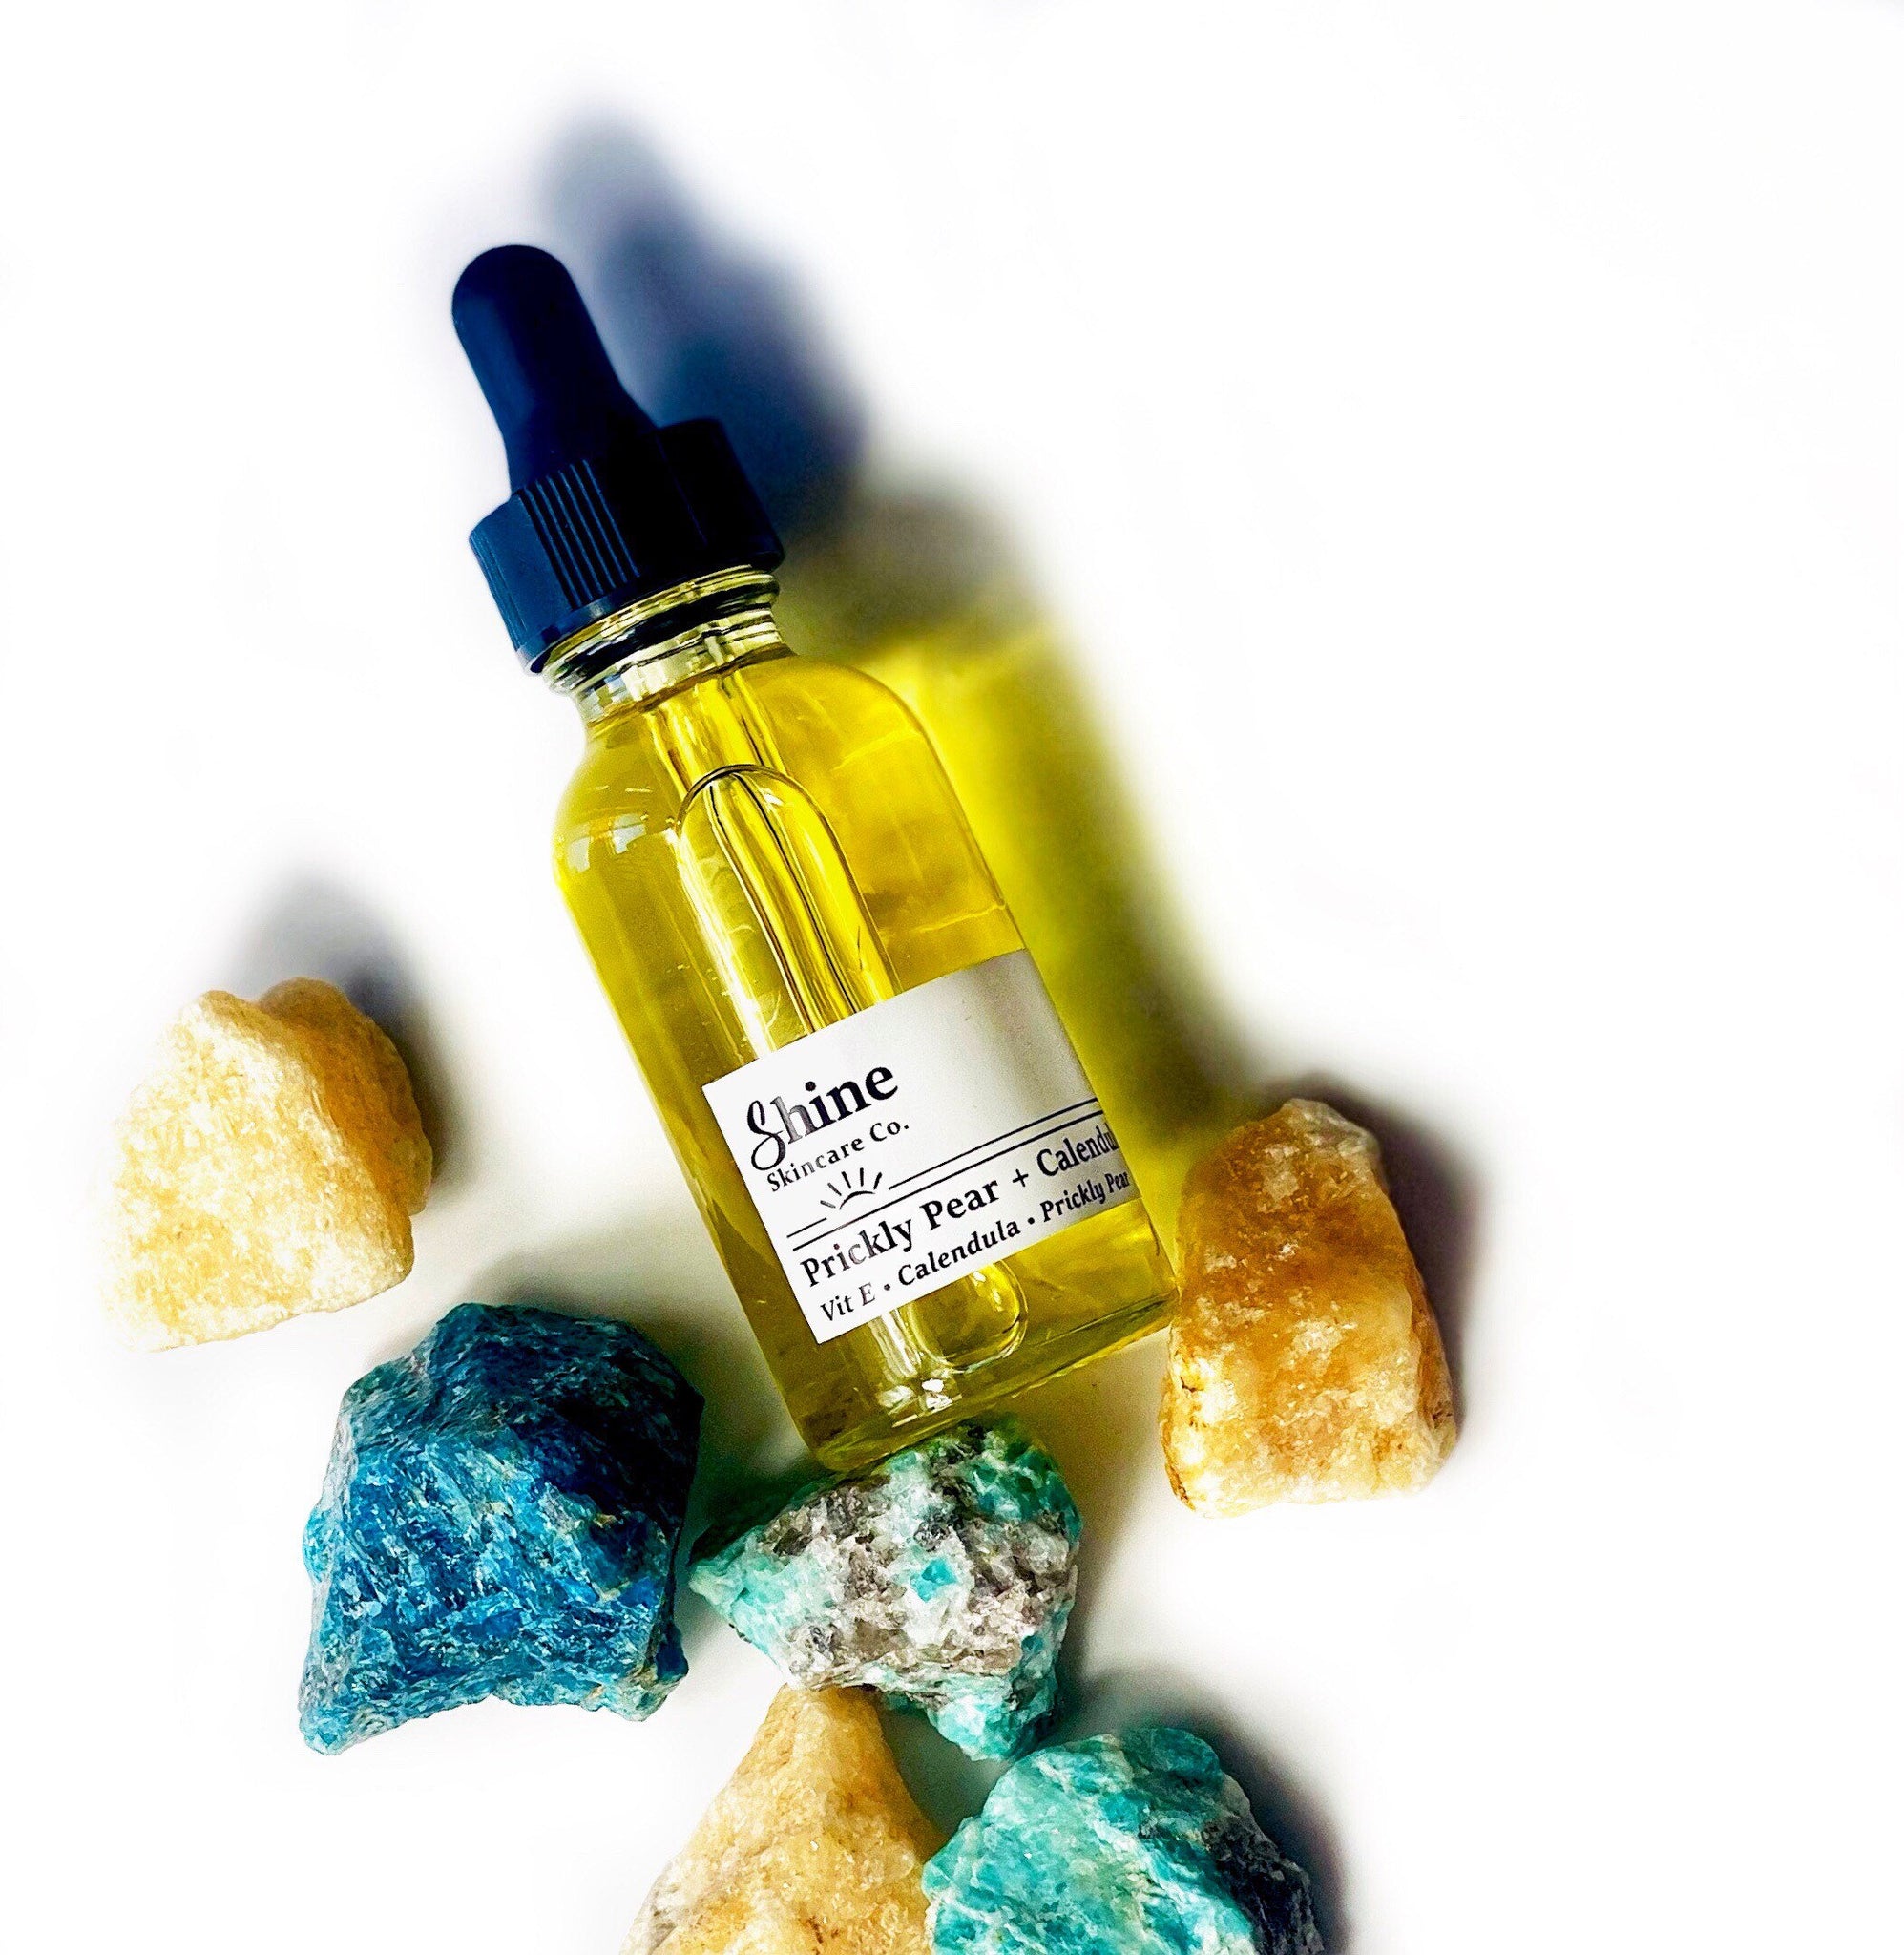 Prickly Pear + Calendula Facial Oil – Shine Skincare Co